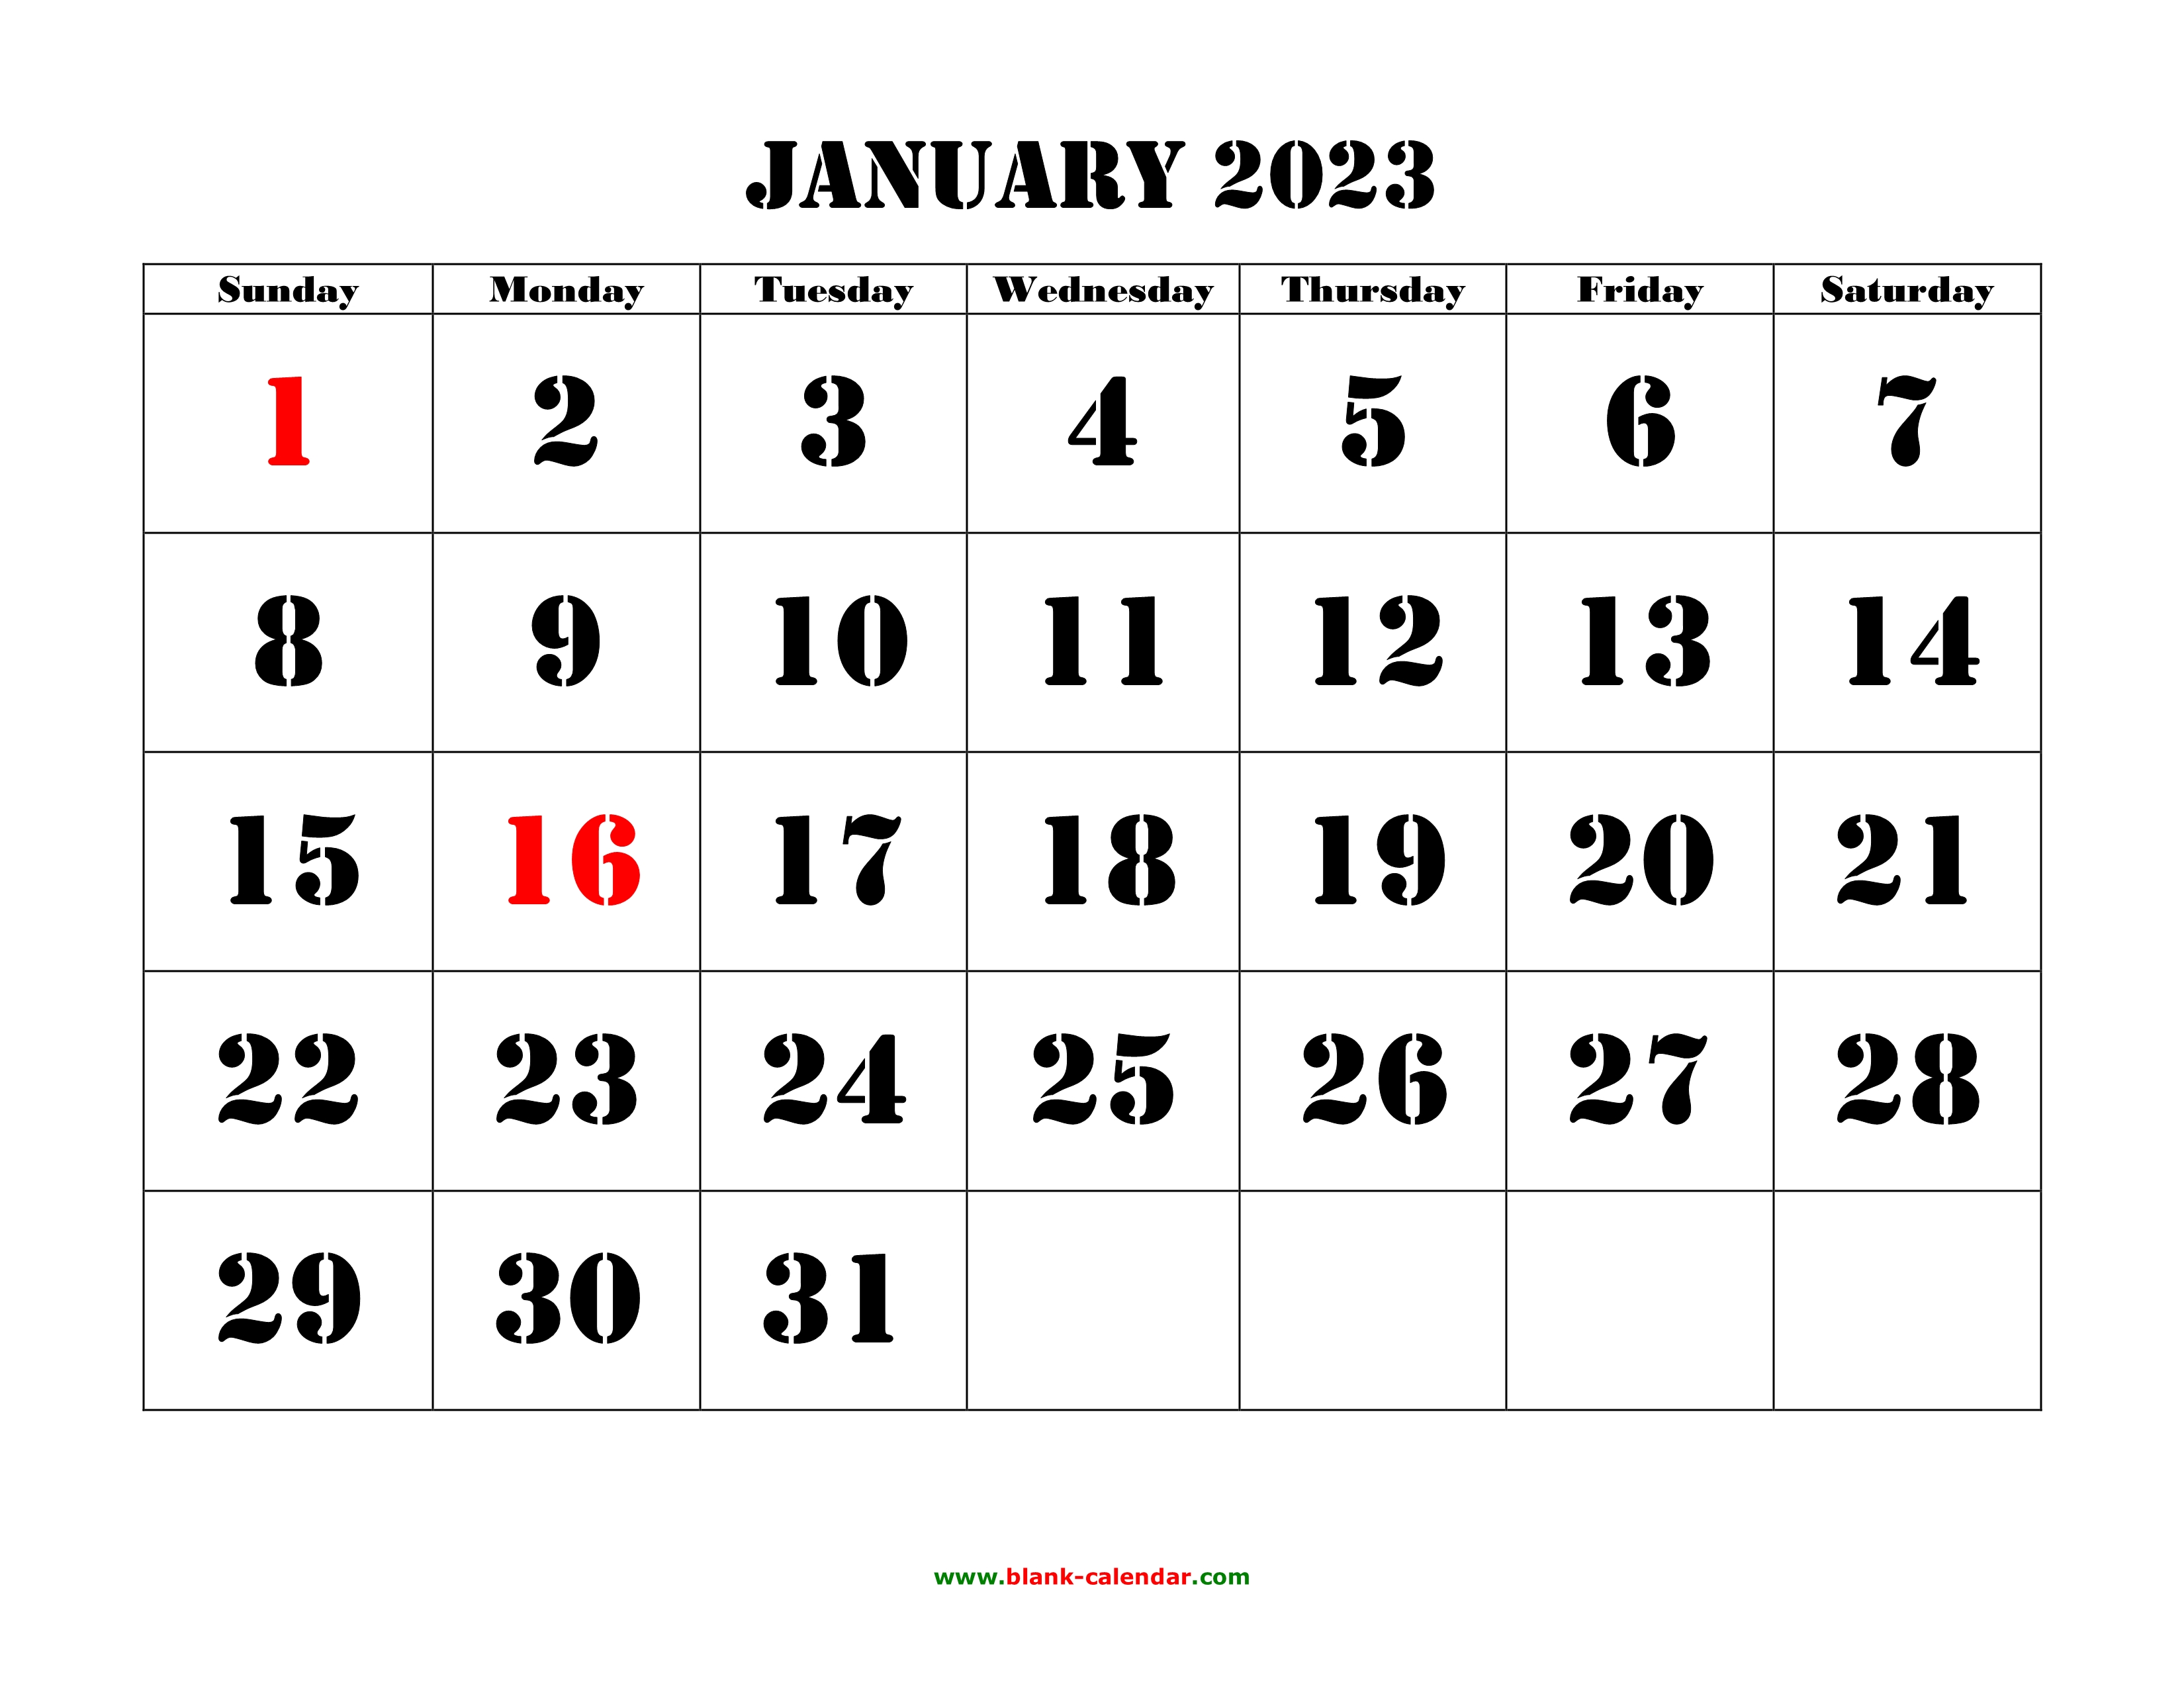 2023-calendar-pdf-word-excel-2023-calendar-templates-and-images